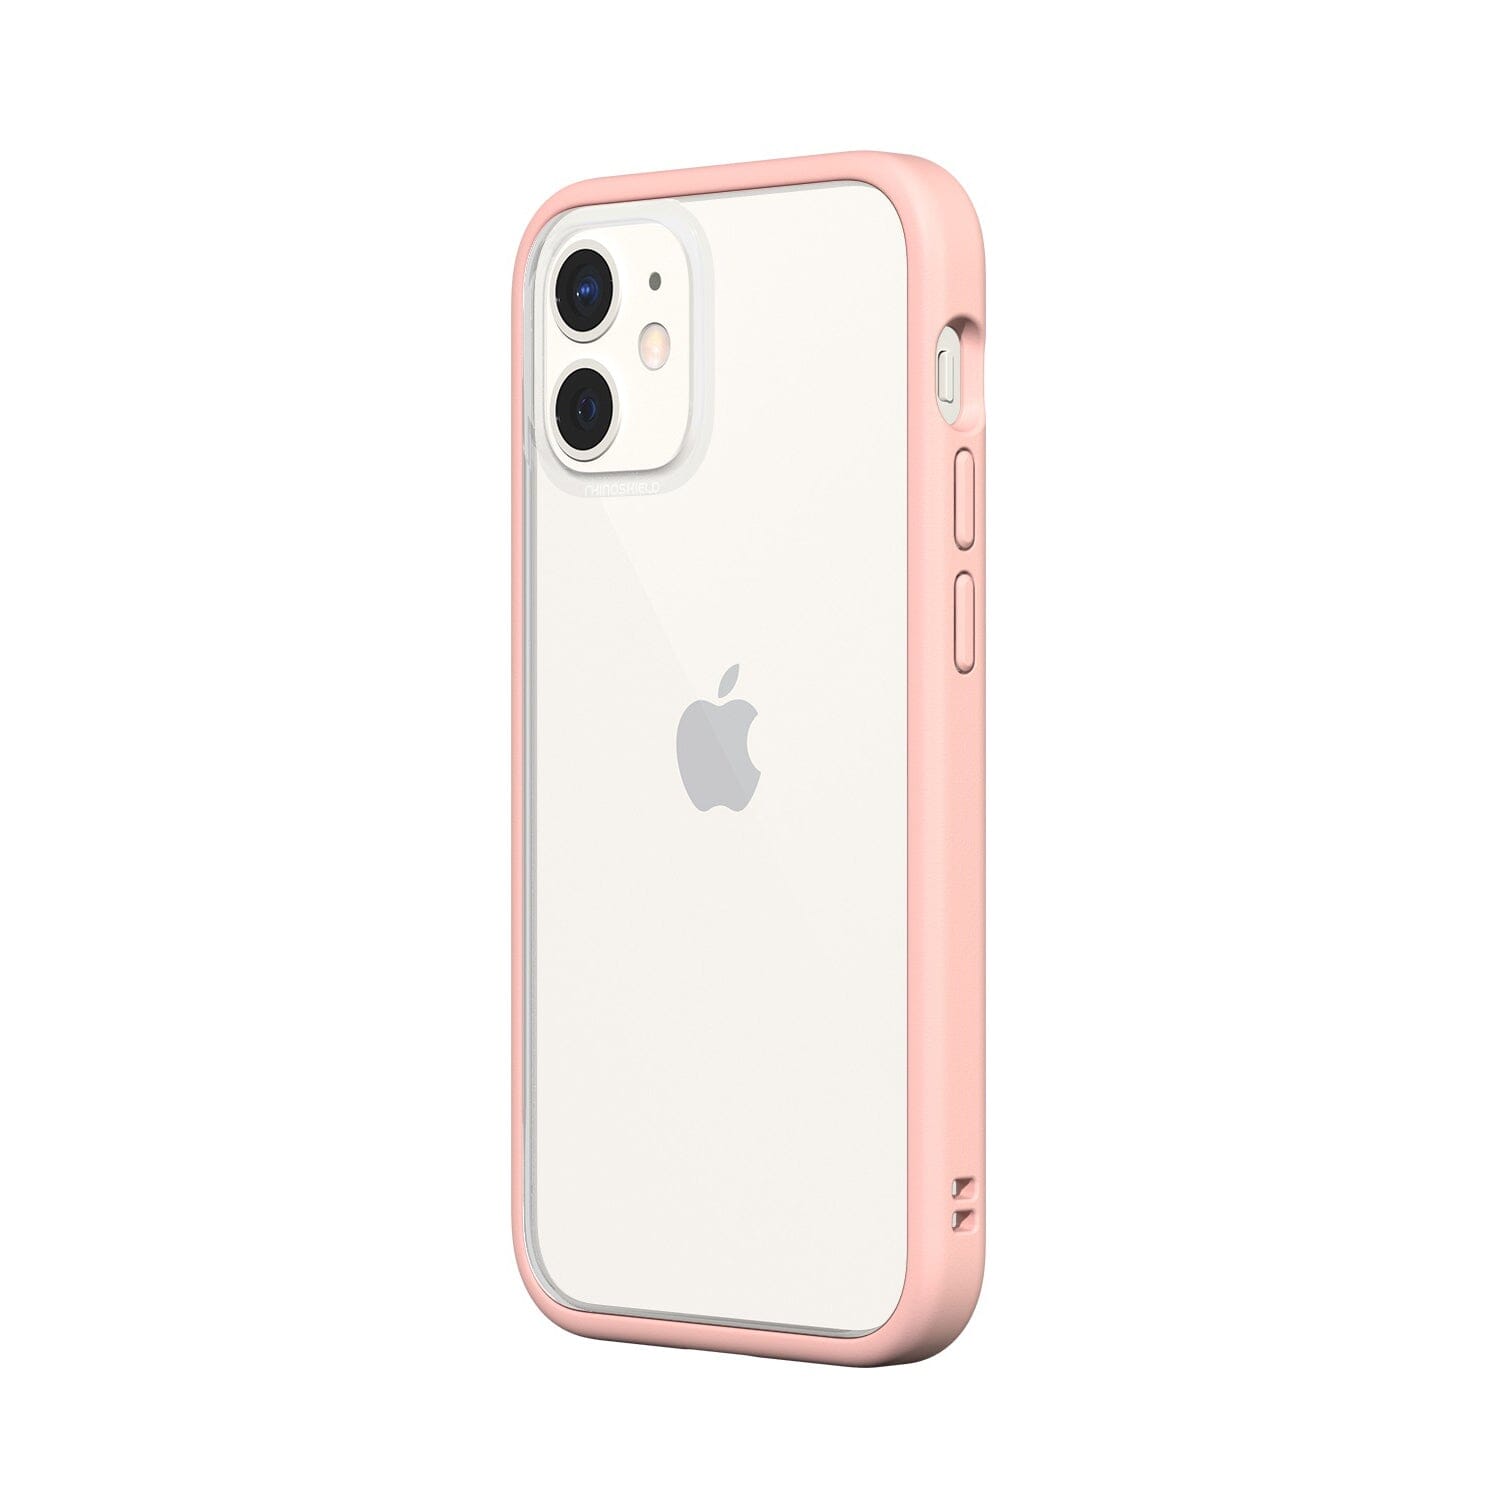 RhinoShield Mod NX Modular Case for iPhone 12 Series (2020) iPhone 12 Series RhinoShield iPhone 12 mini 5.4" Blush Pink 